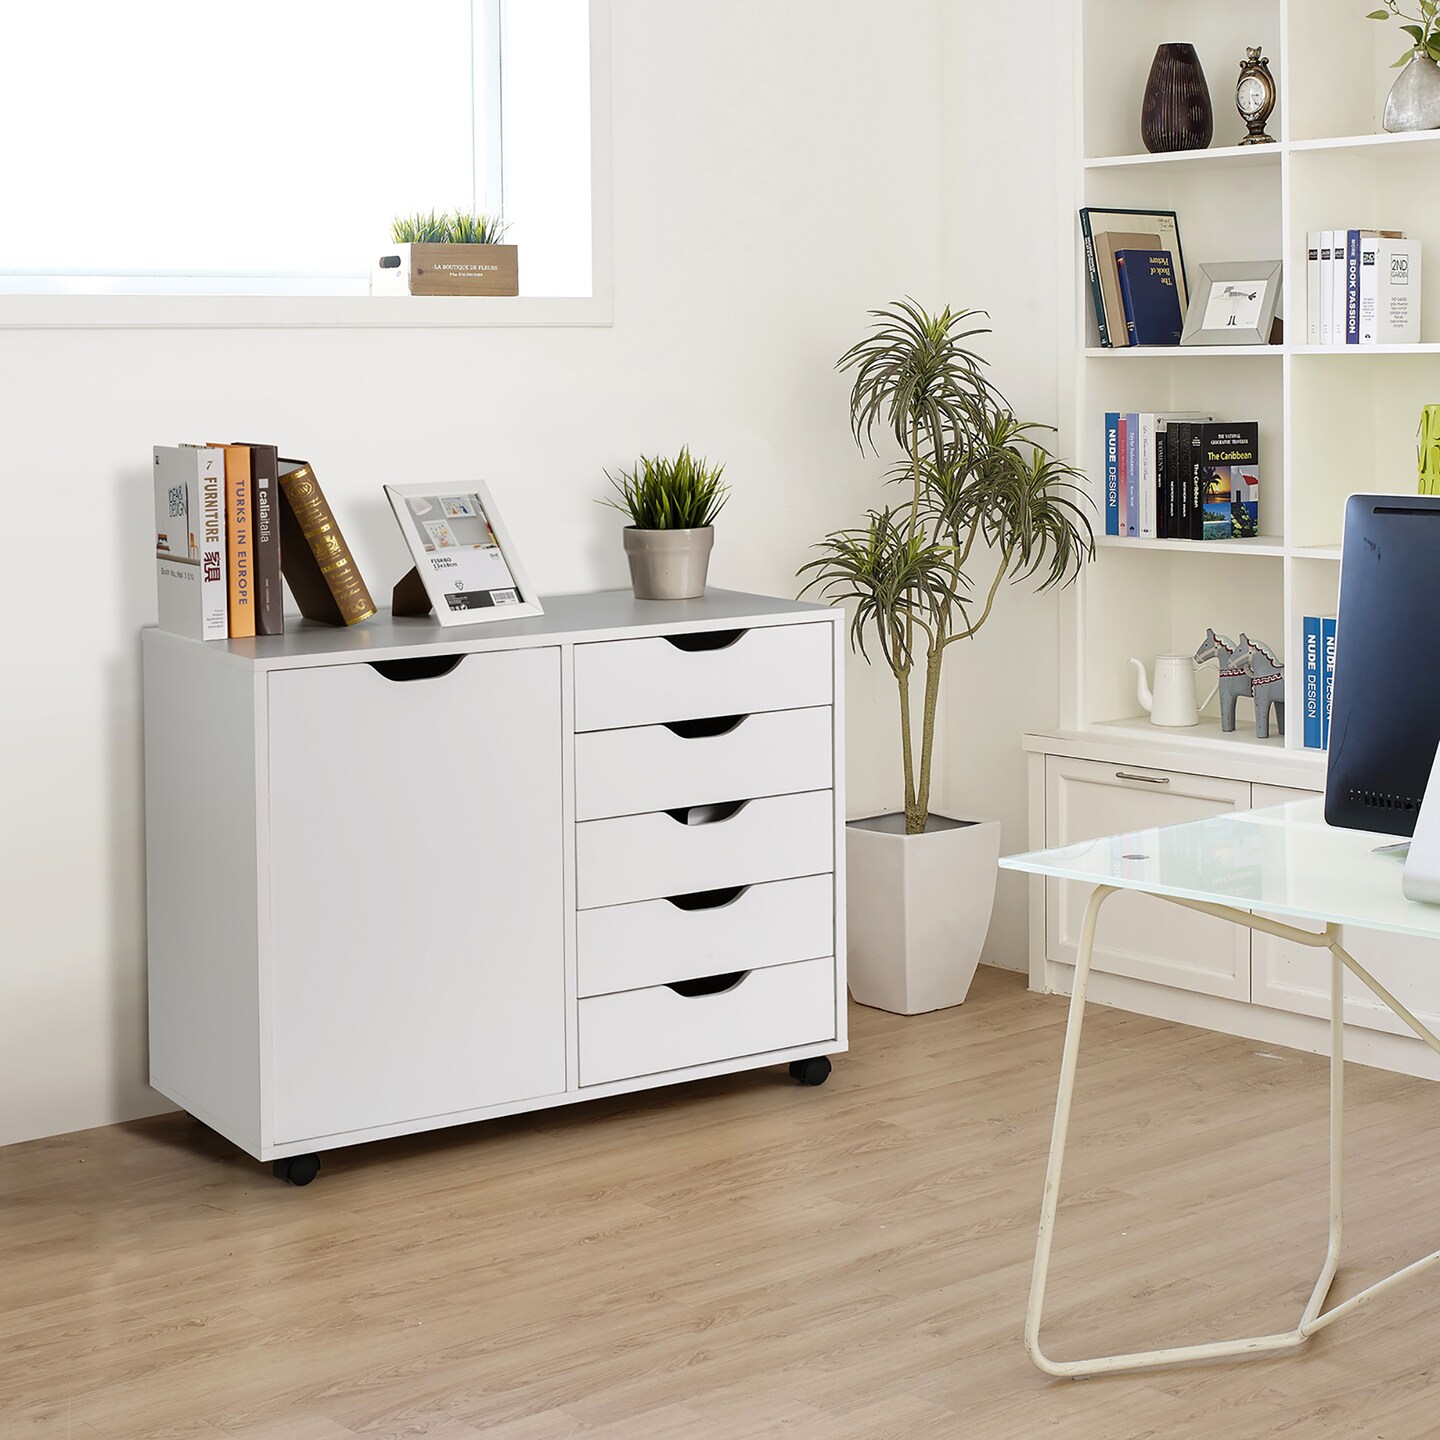 5-Drawer Dresser Chest Mobile Storage Cabinet with Door-White